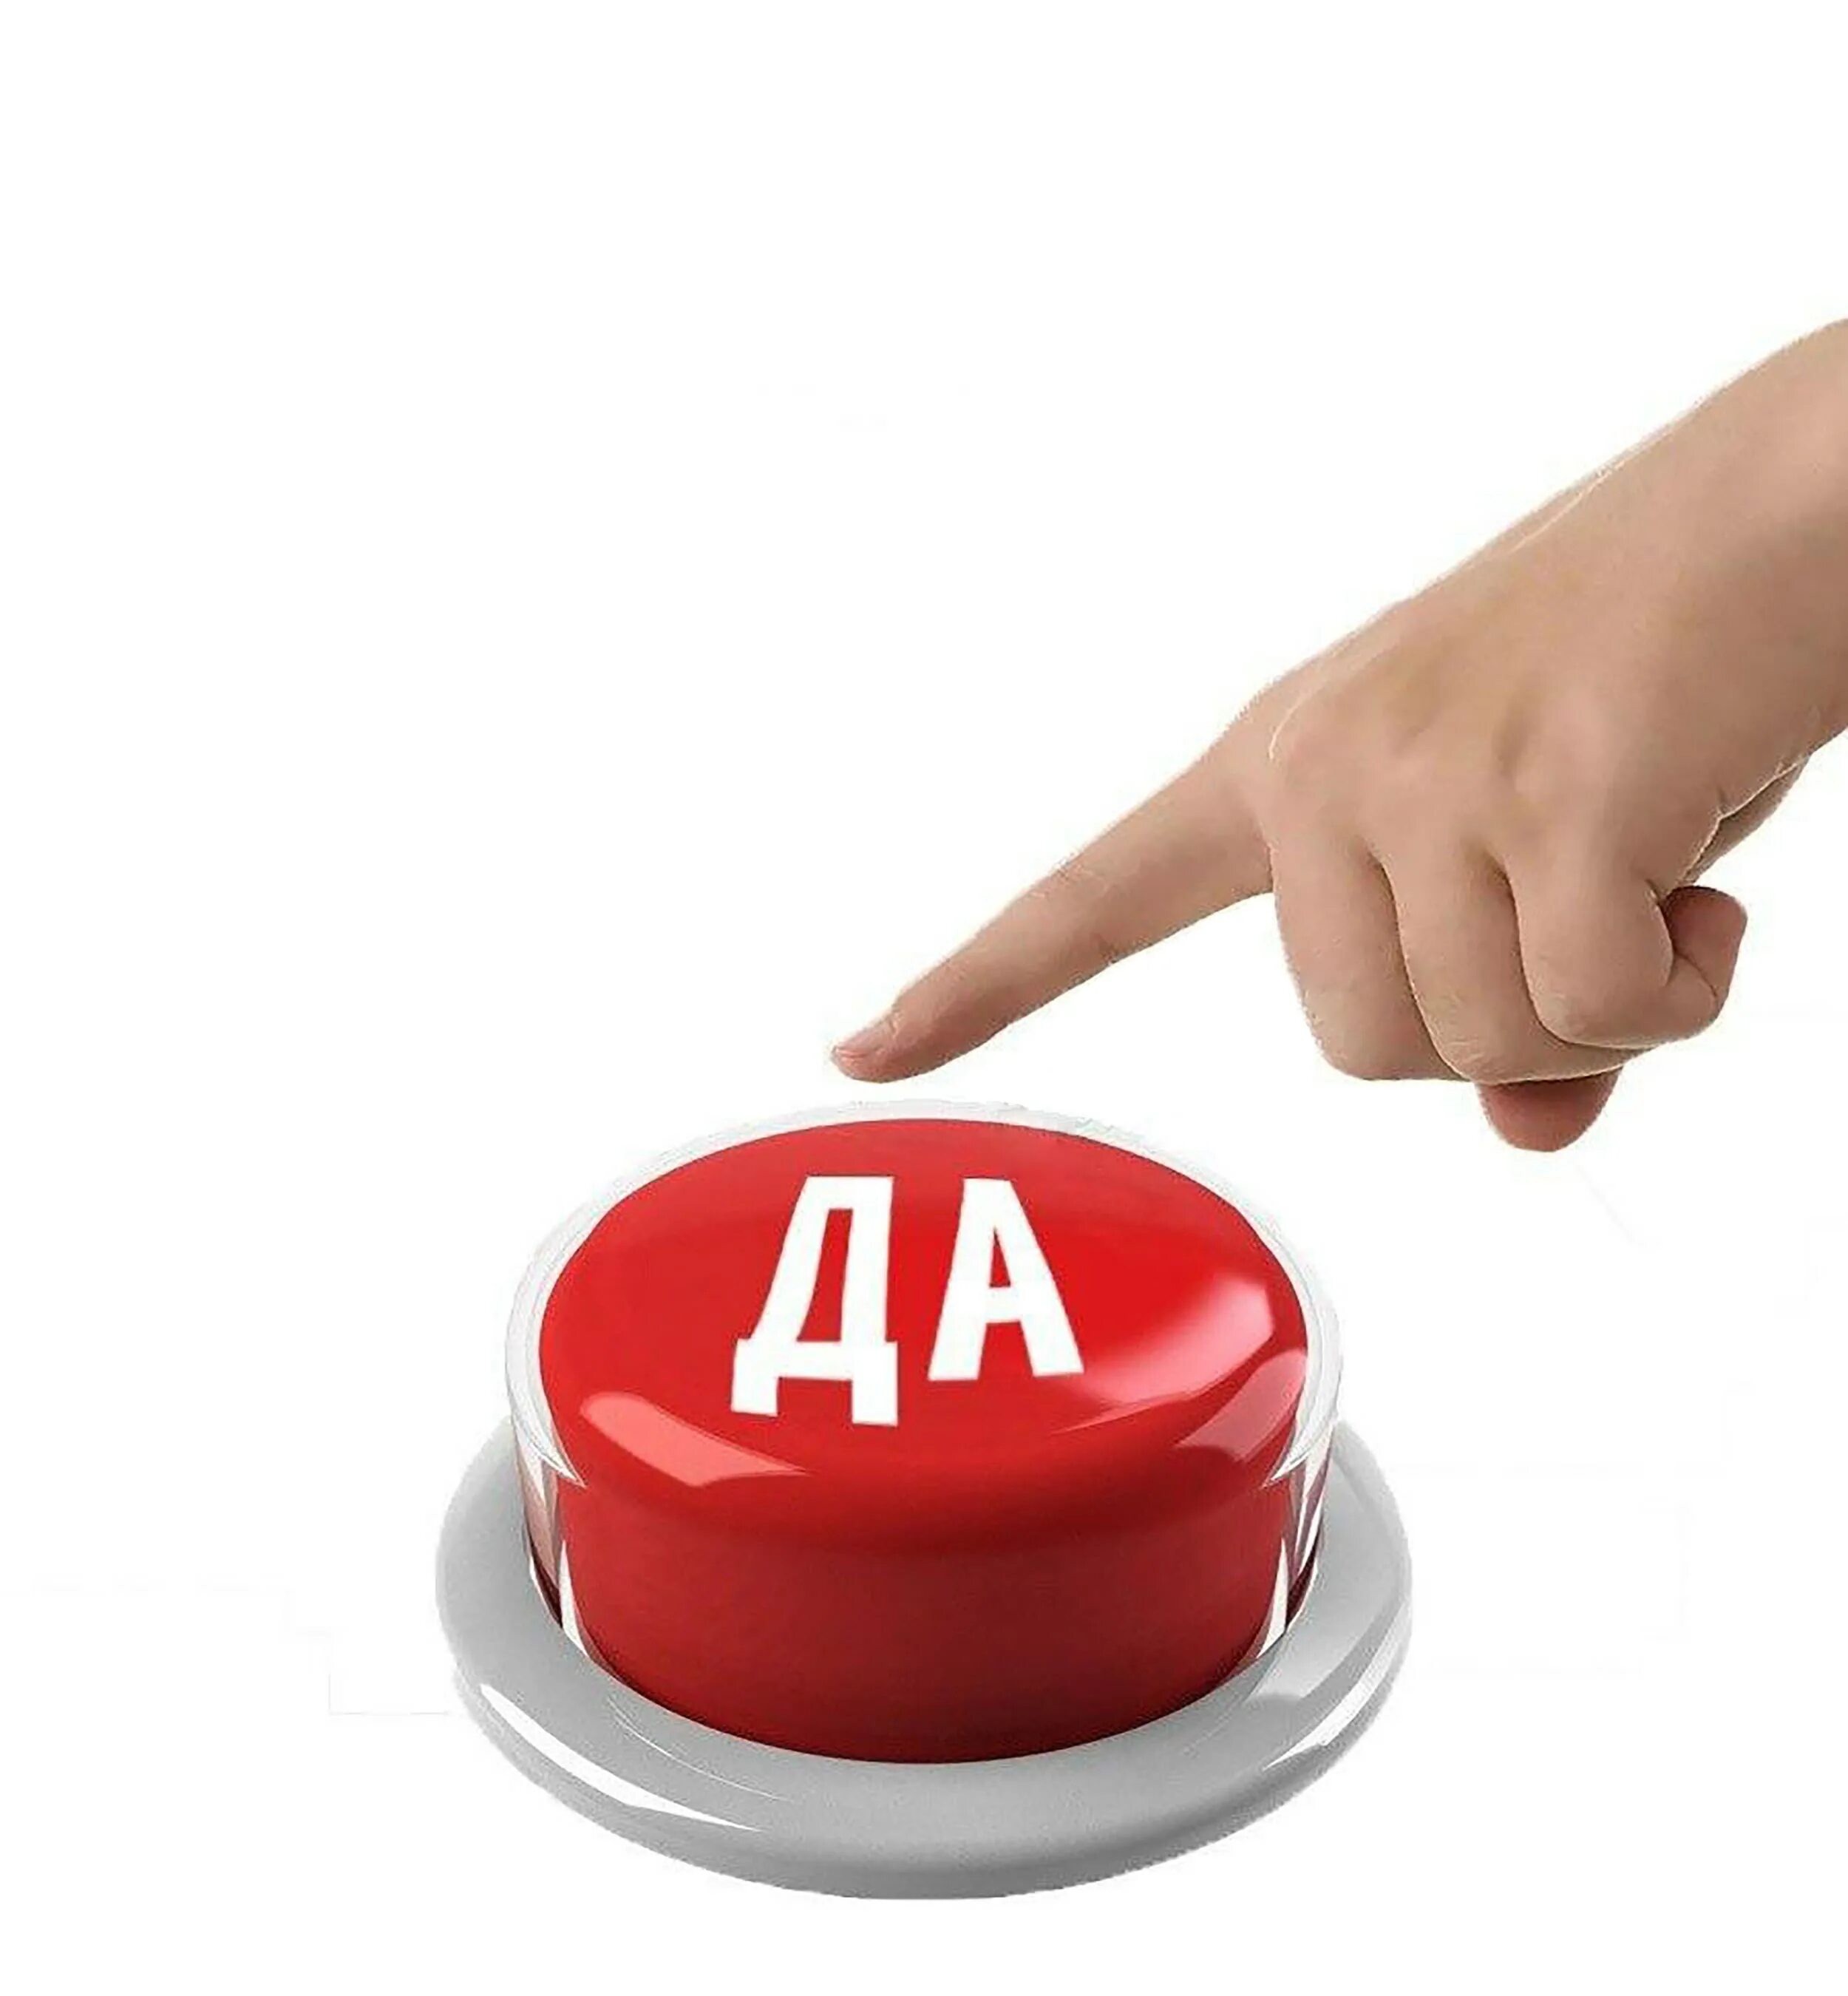 Красная кнопка. Кнопка жми. Жмет на кнопку. Нажать на красную кнопку.